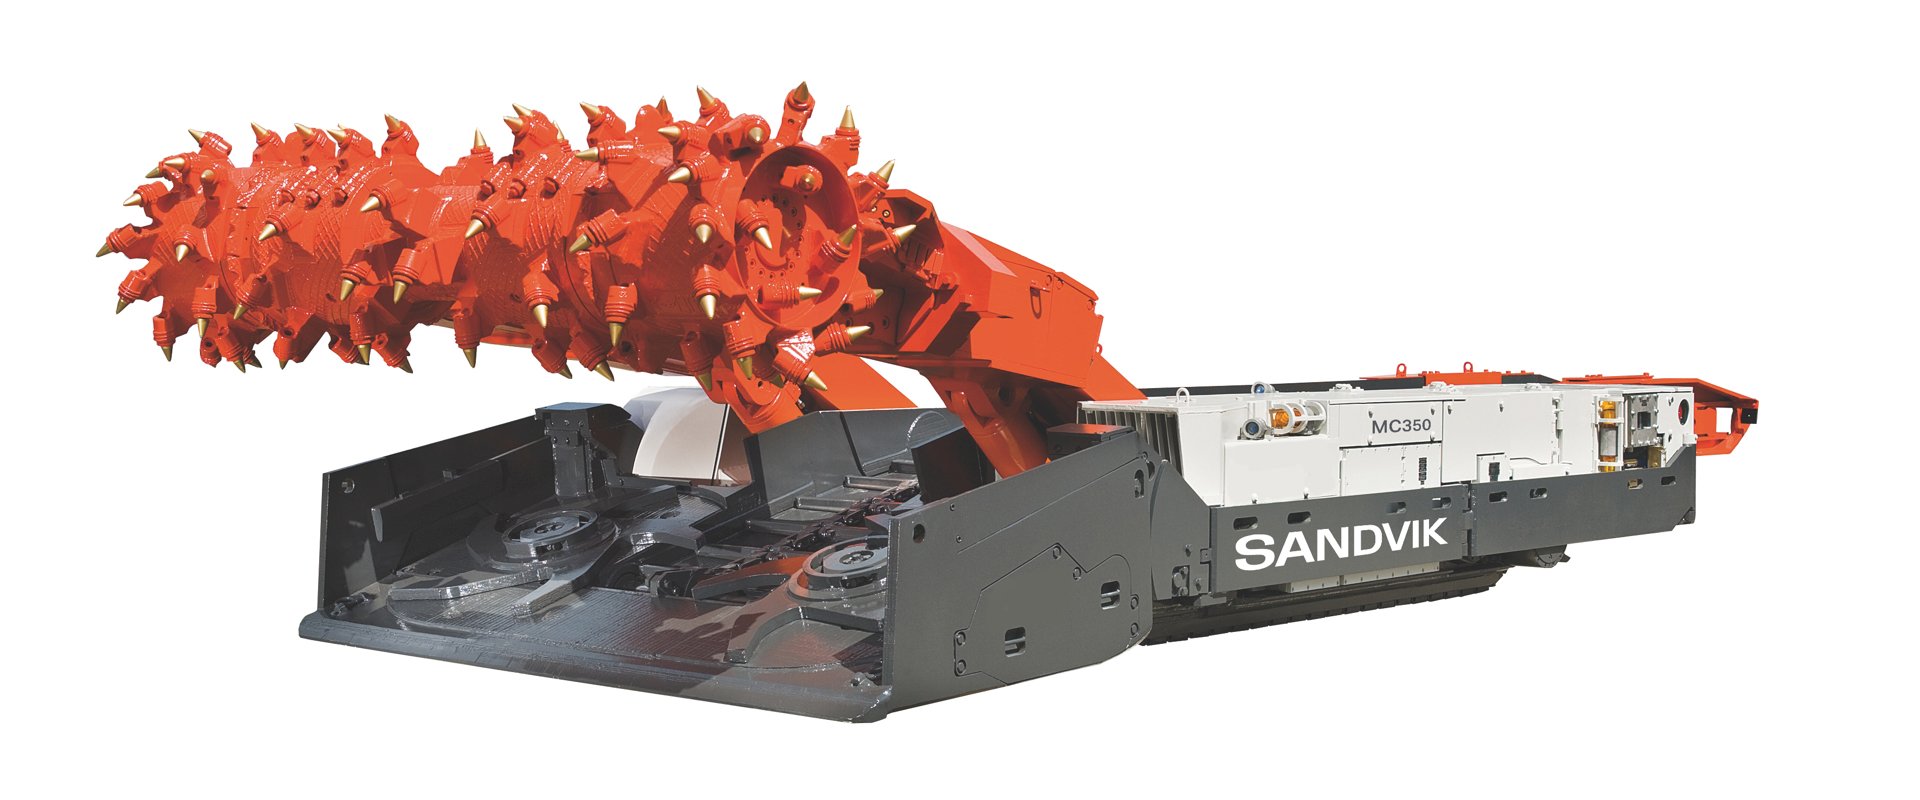 Sandvik MC350 Continuous Miner Designed For Coal & Potash